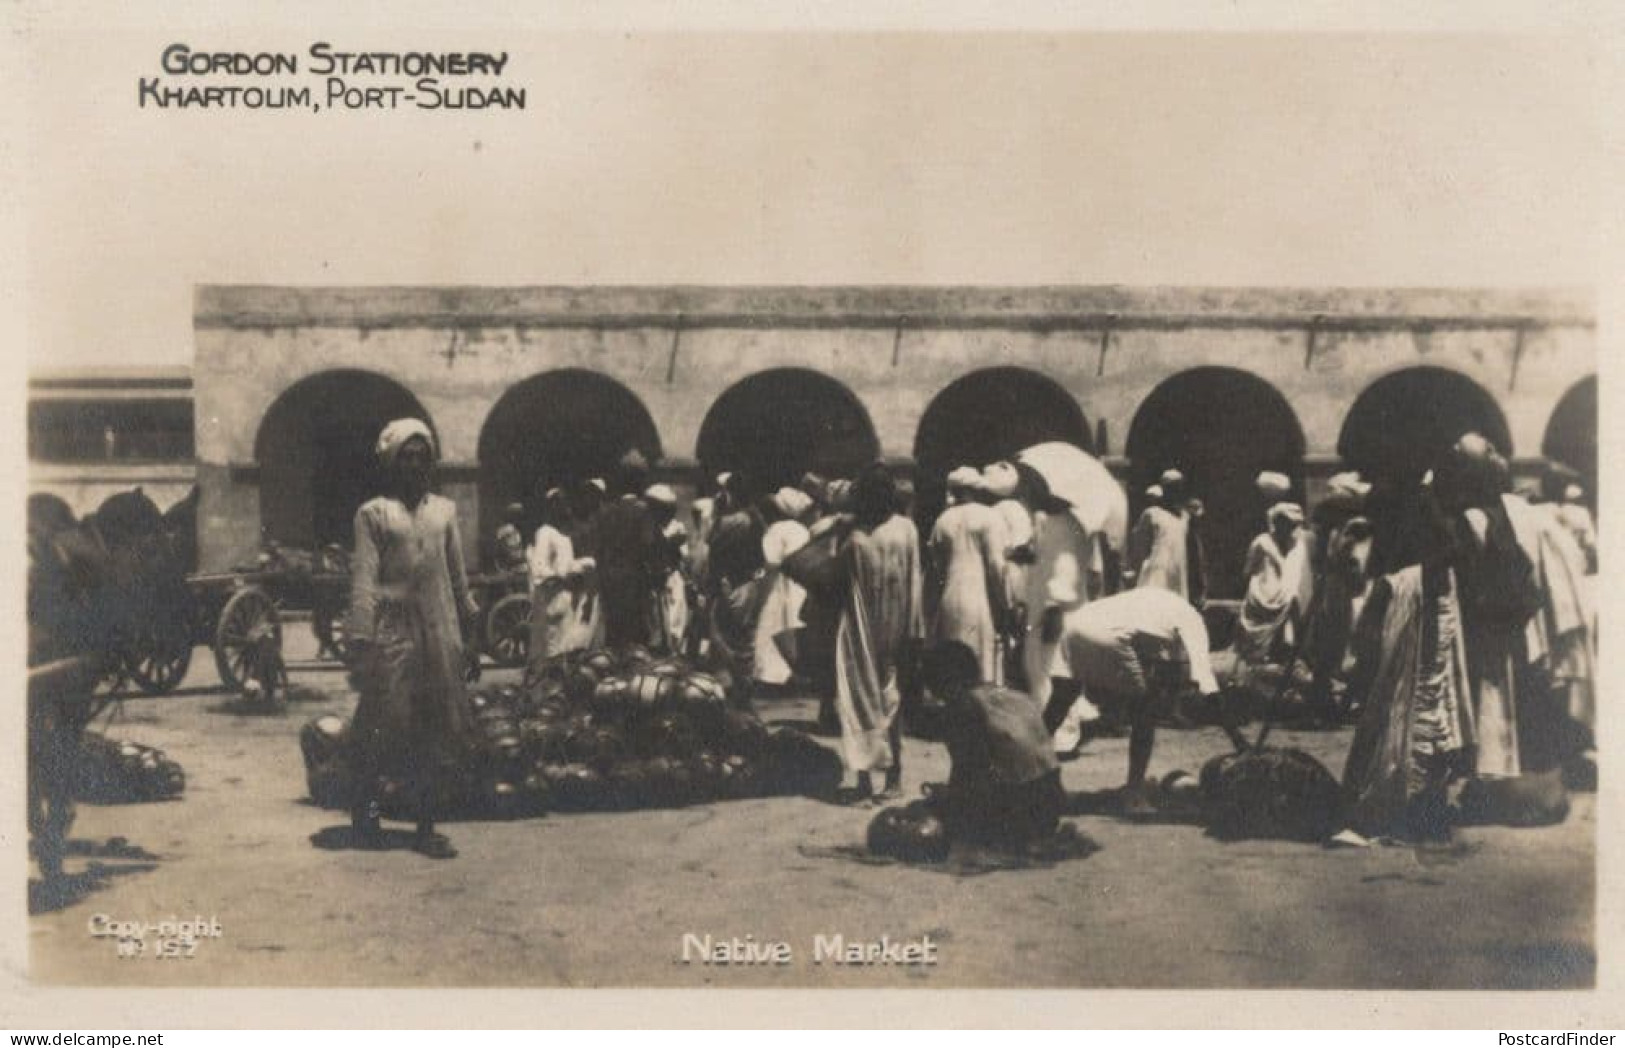 Gordon Stationary Khartoum Port Sudan Advertising Old Postcard - South Africa